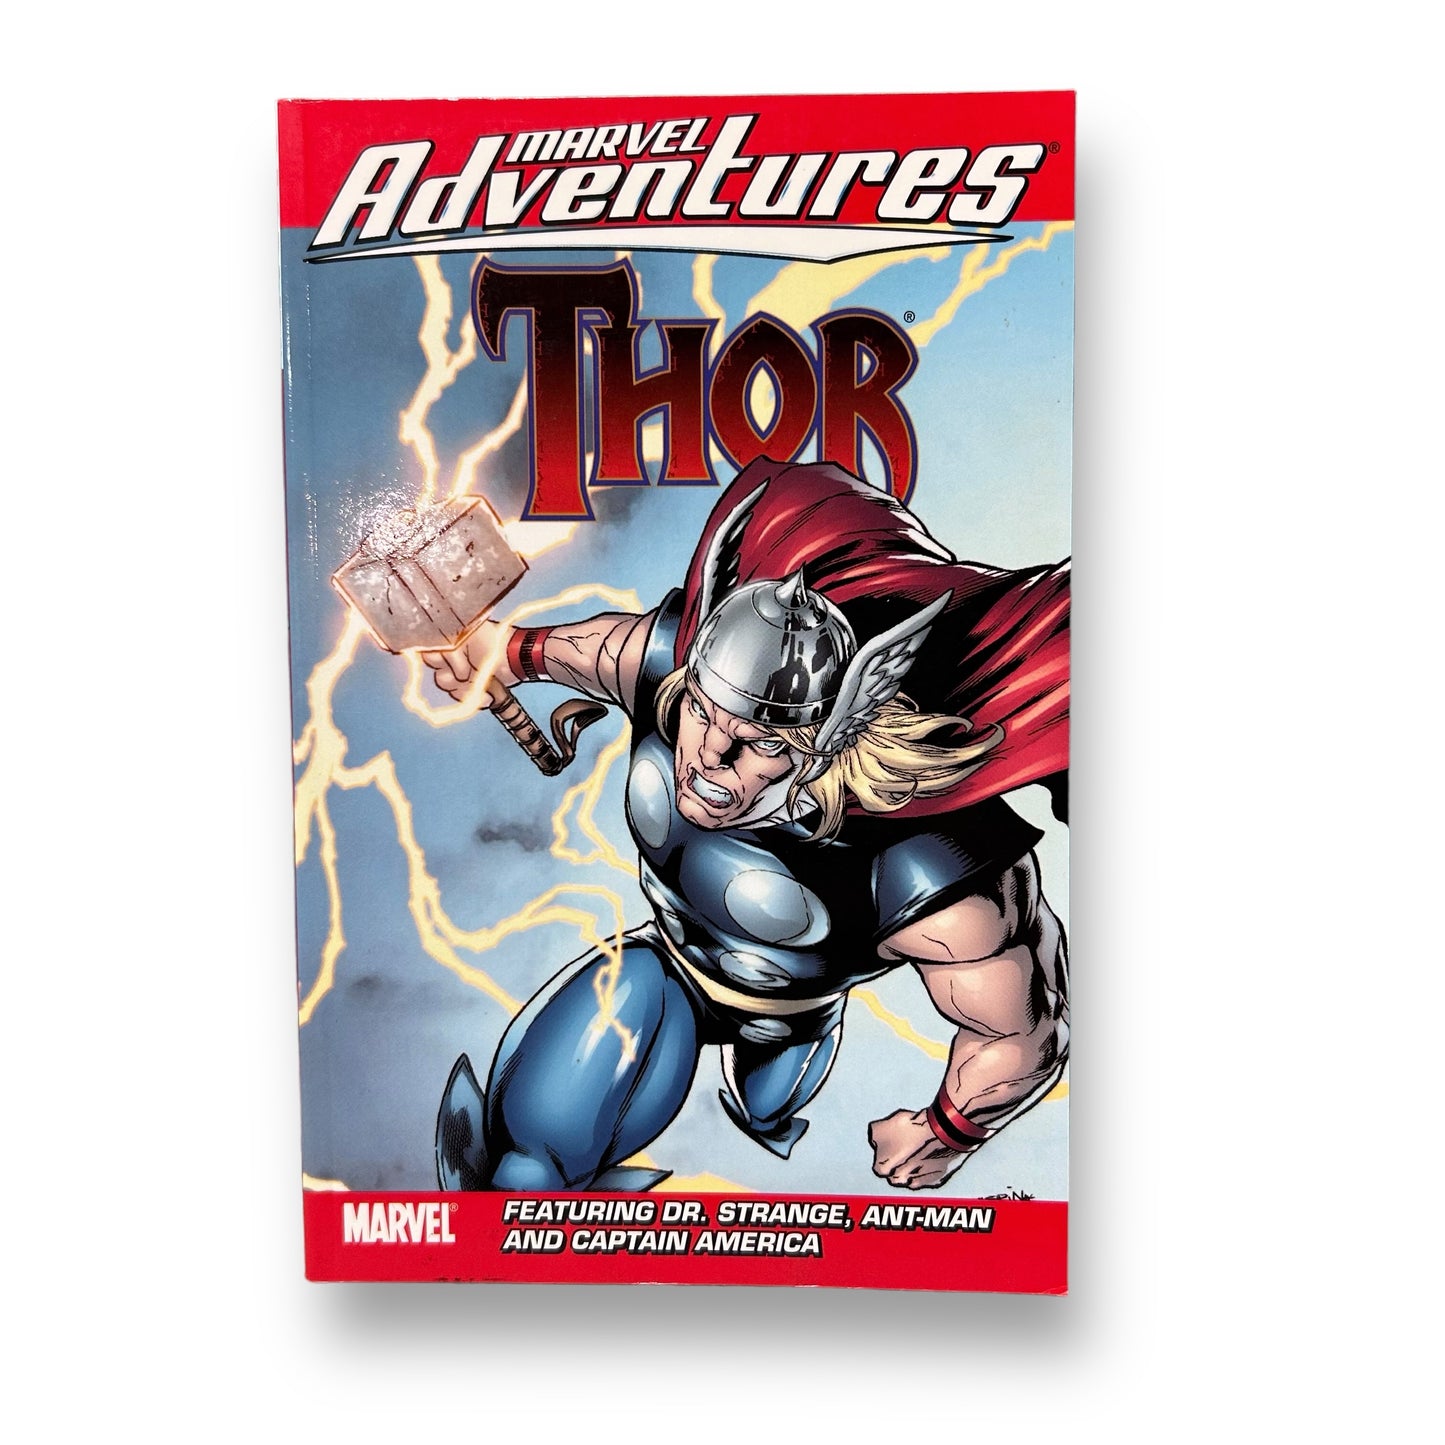 Marvel Adventures Super Heroes Collectors Set: 5 Comic Books